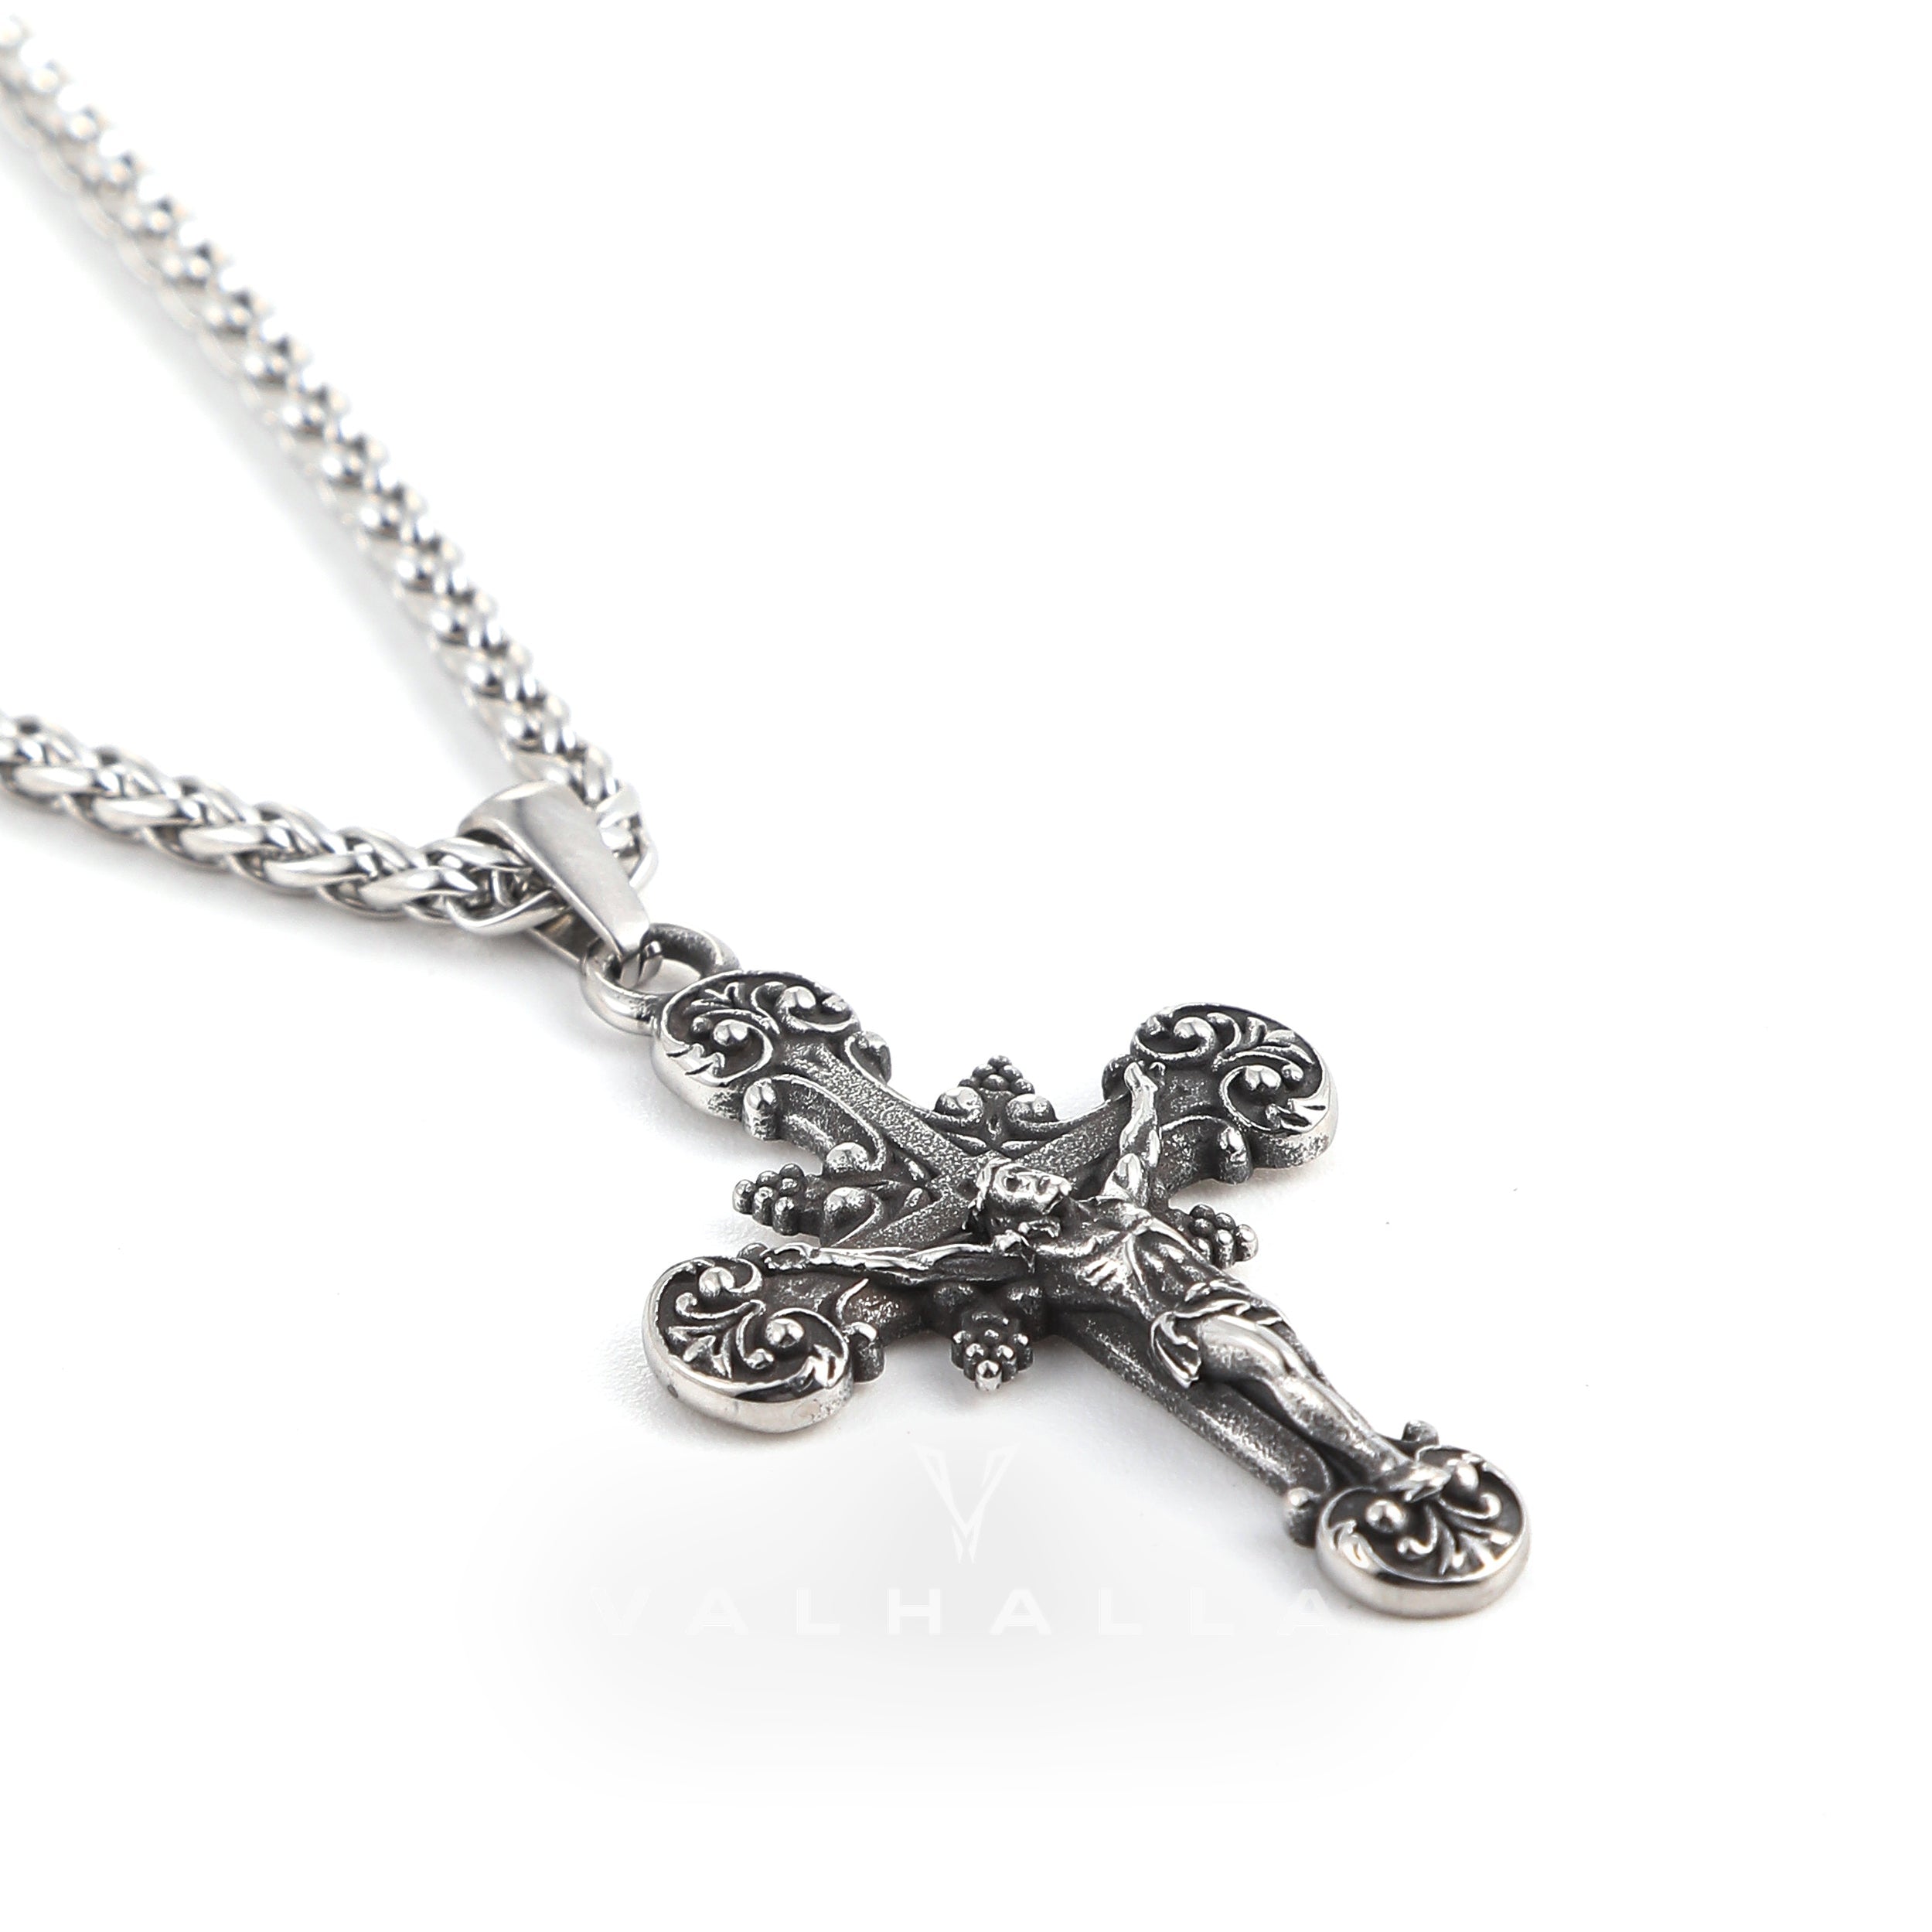 Jesus Suffering Stainless Steel Cross Pendant & Chain